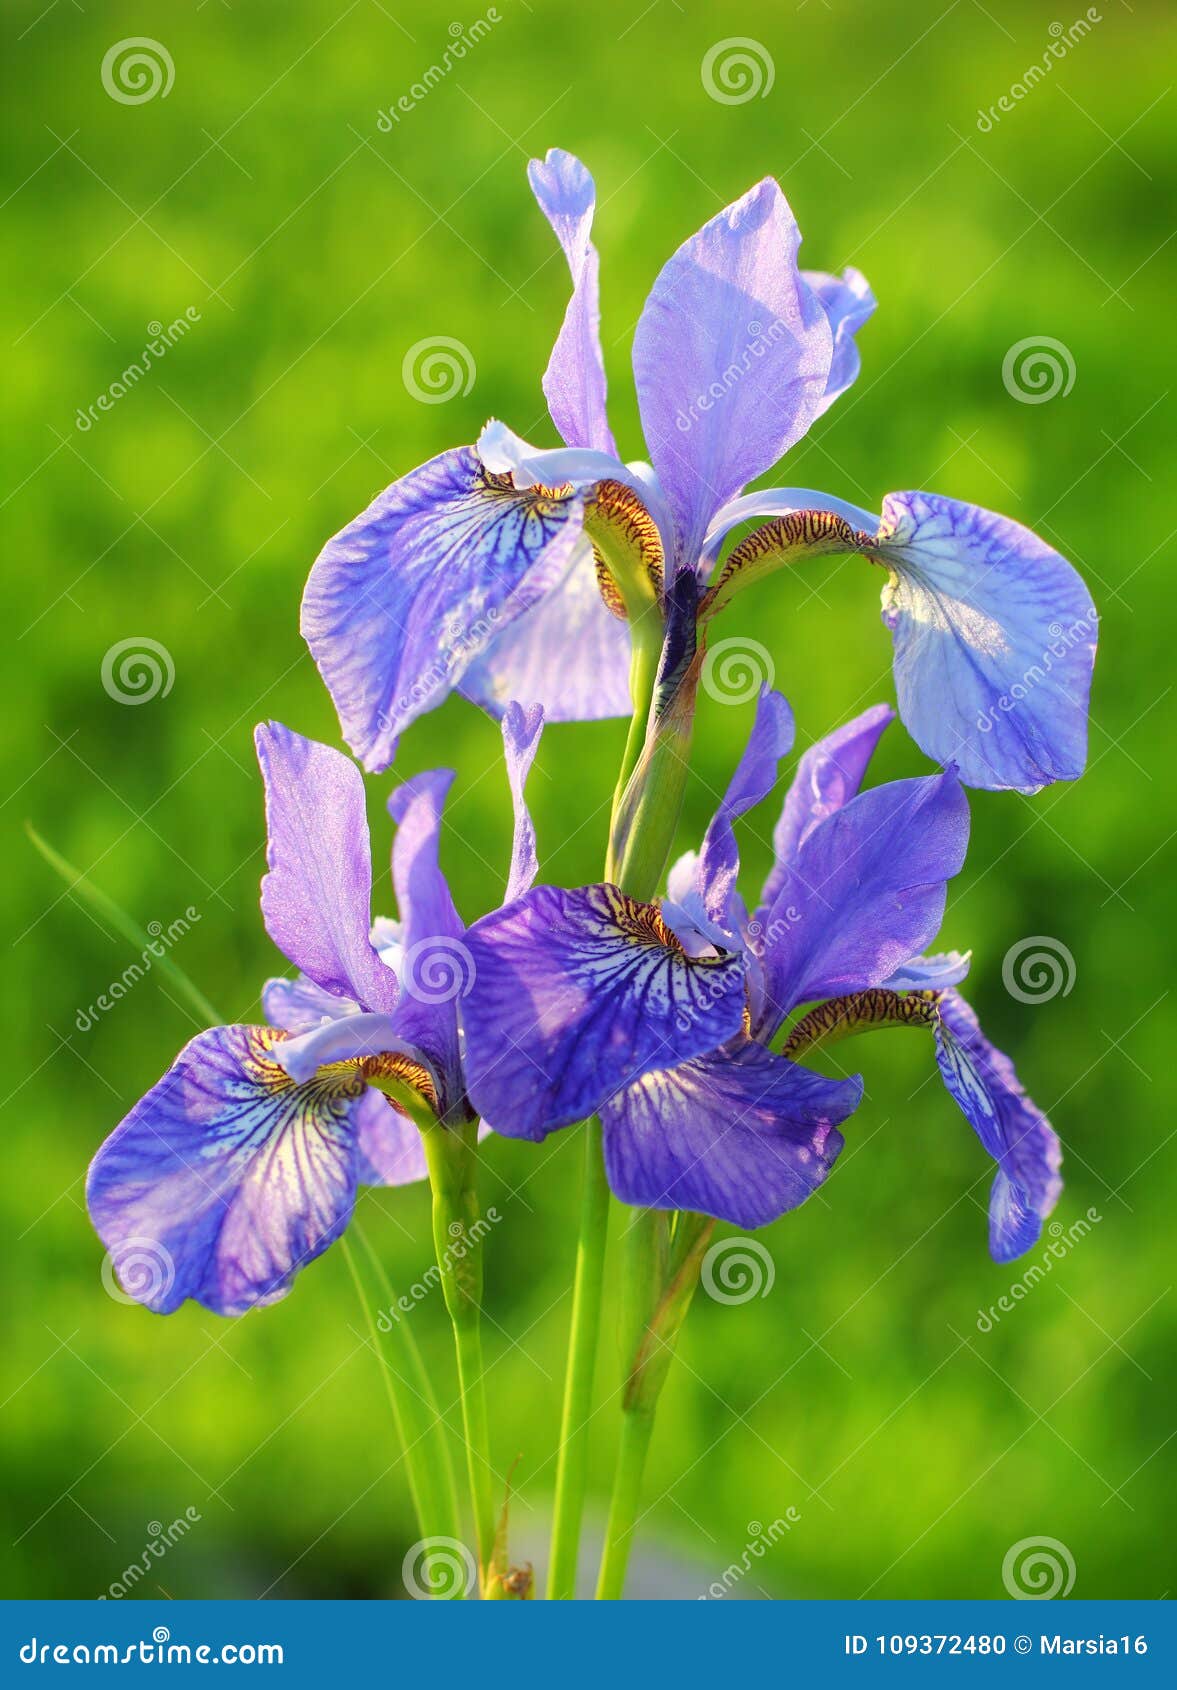 Purple and White Iris Flowers. Stock Photo   Image of background ...